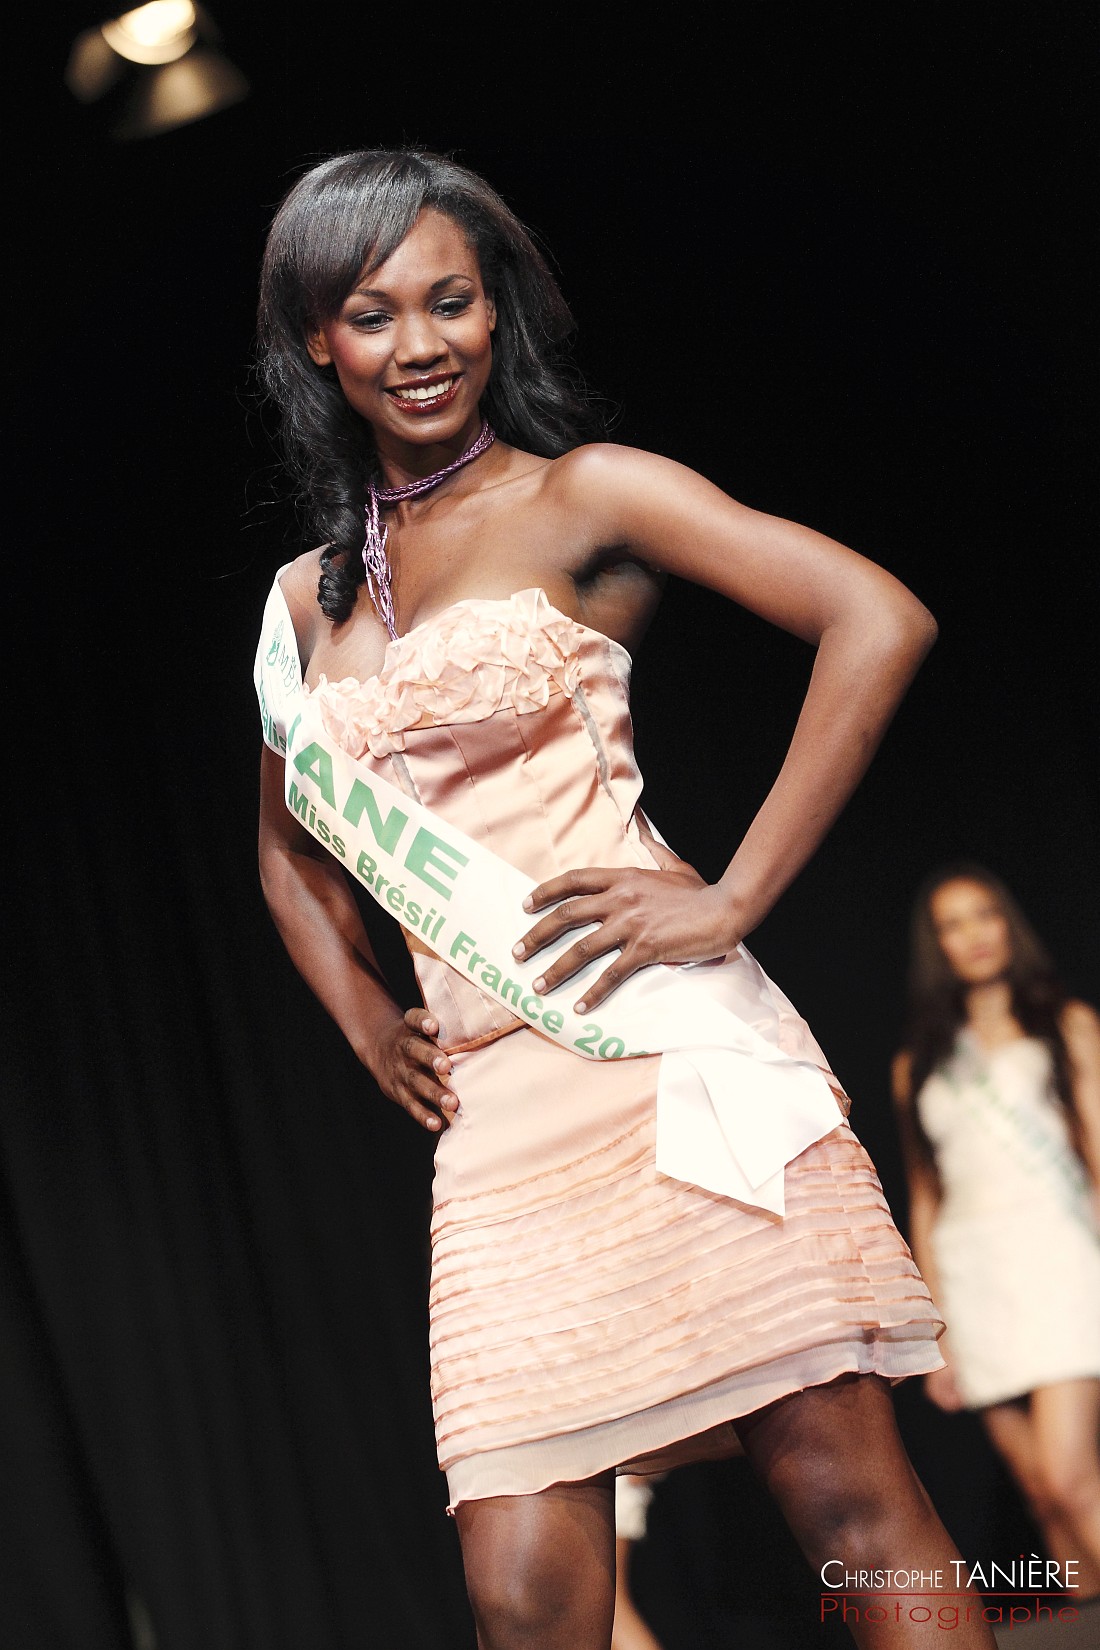 Miss Bresil France 2013-Iane Conceiçao dos Santos